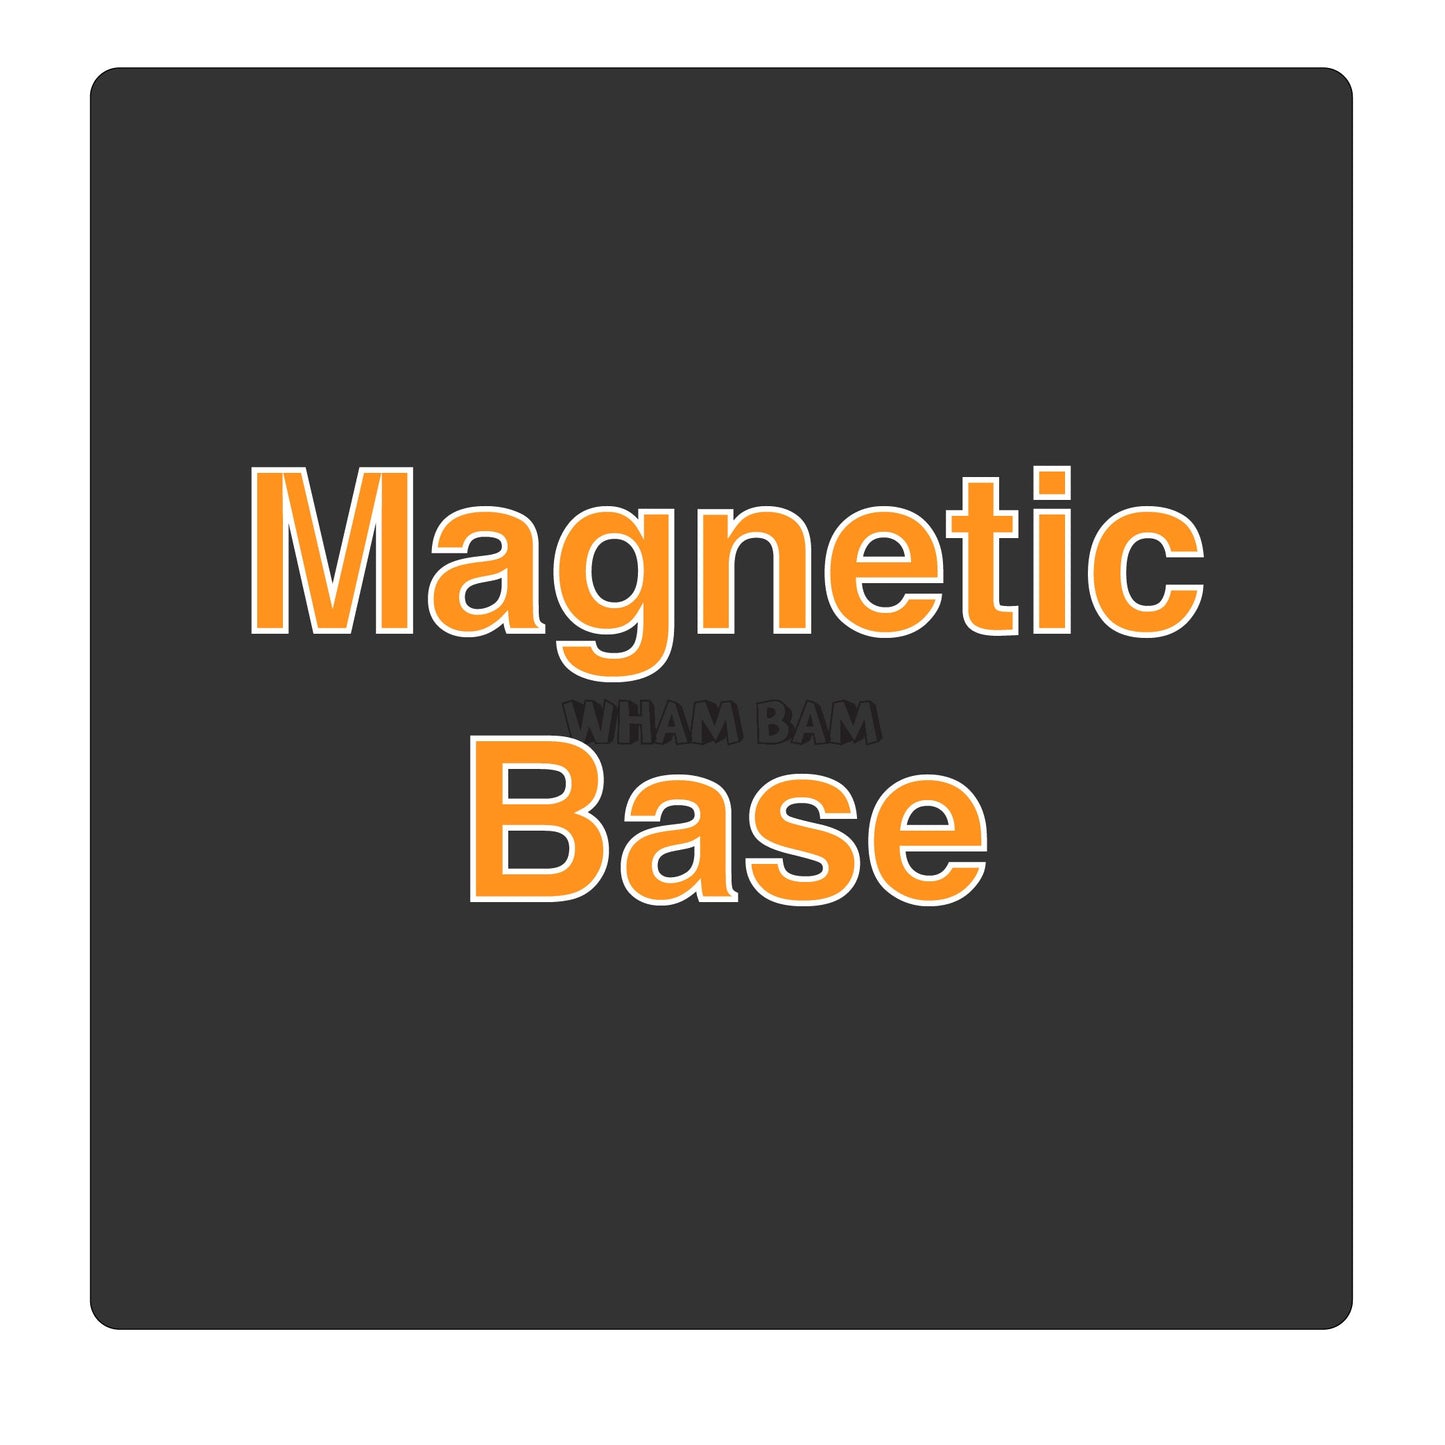 Magnetic Base - 430 x 420 - Creality CR-6 Max